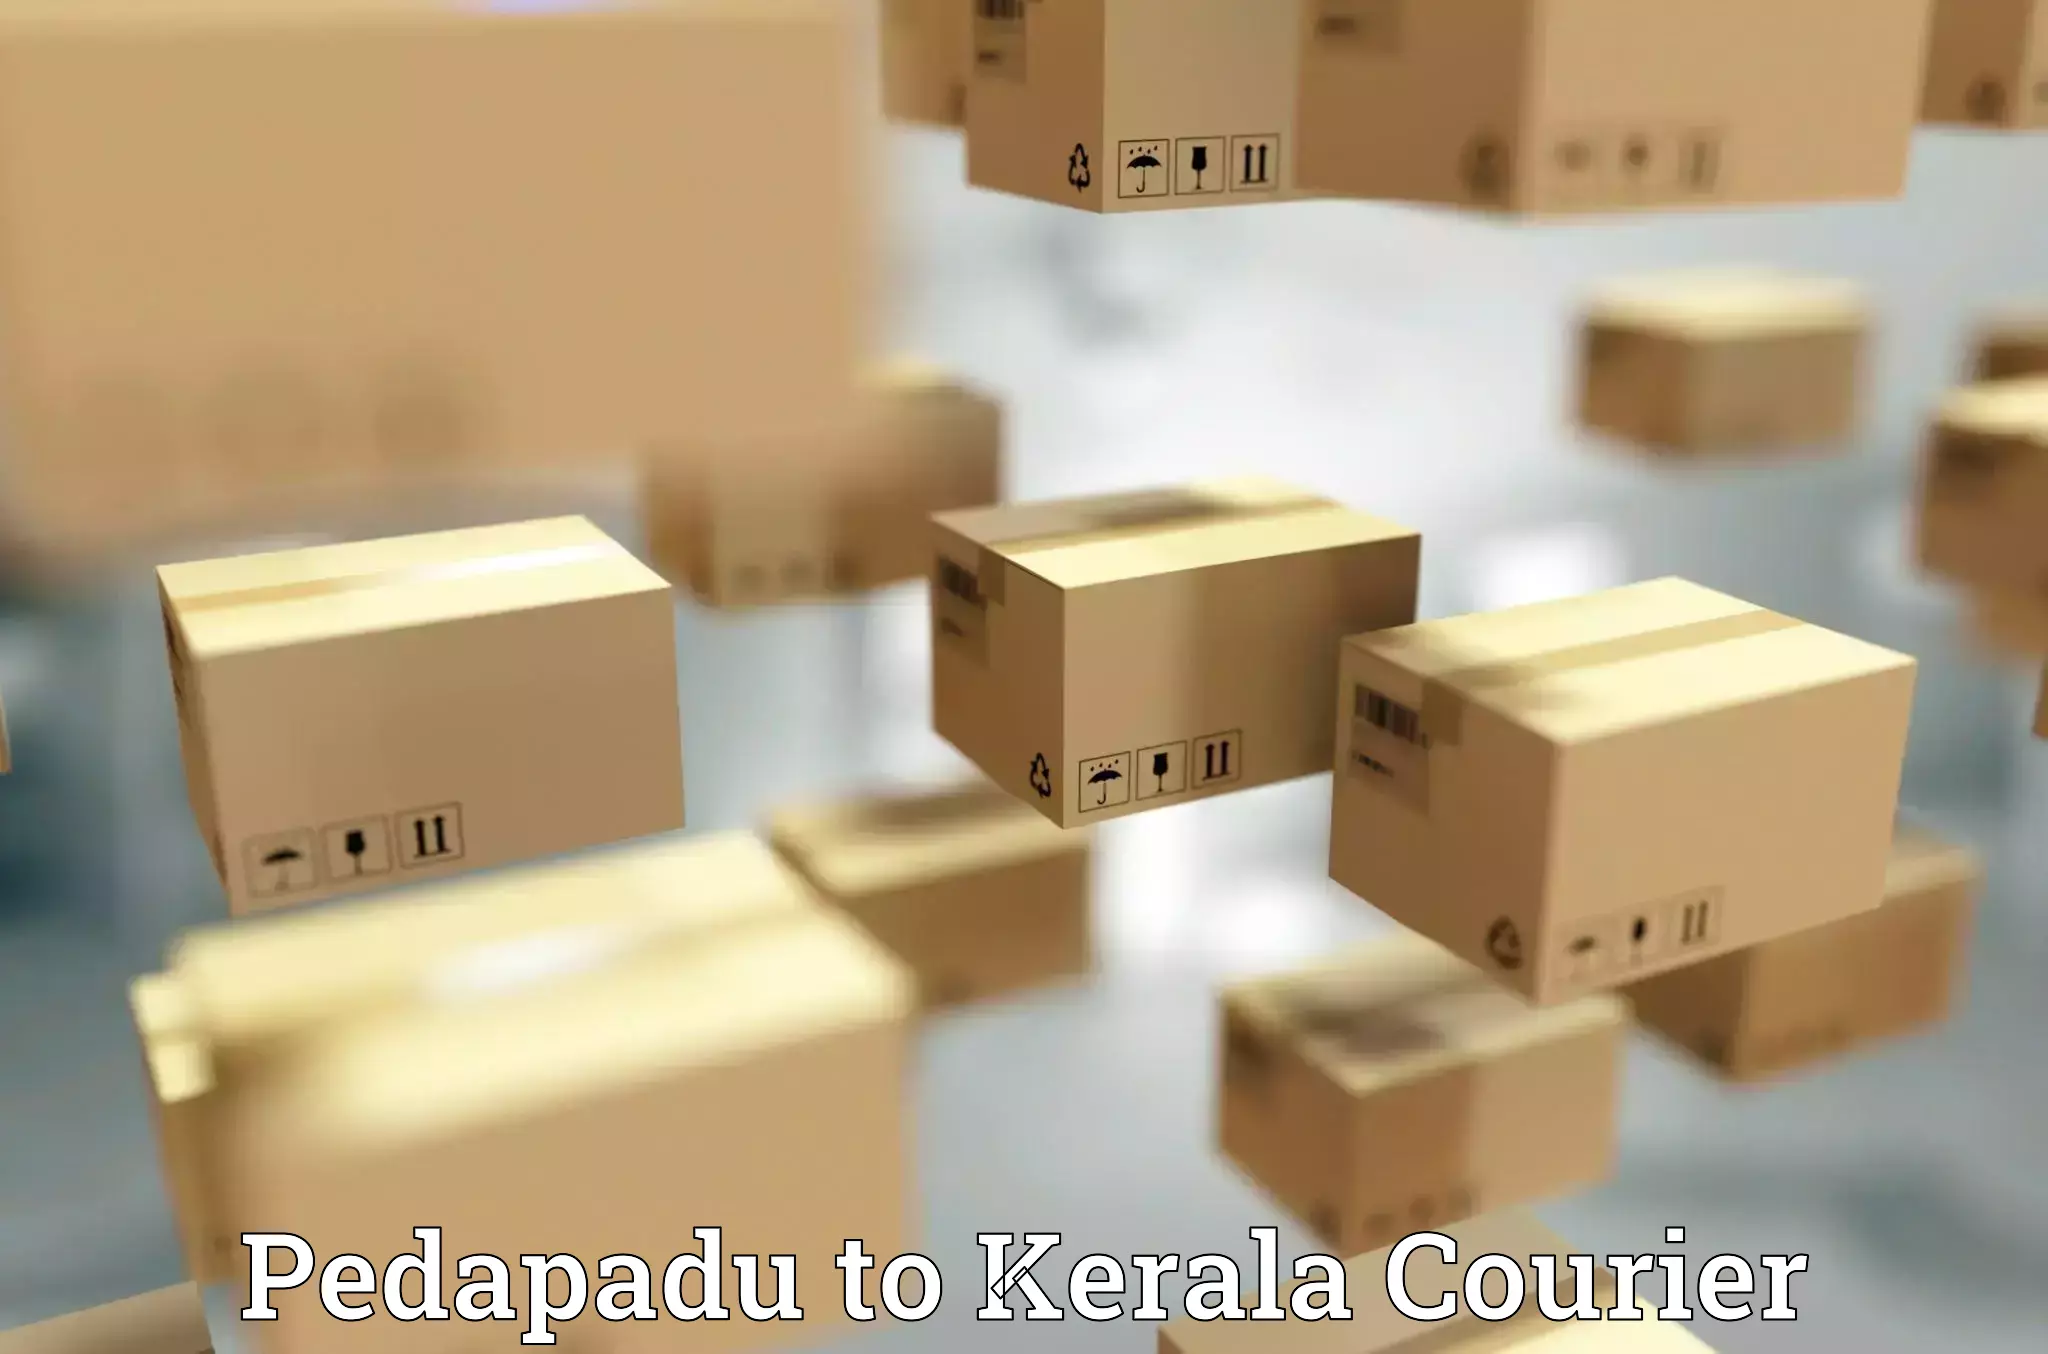 State-of-the-art courier technology Pedapadu to Tiruvalla